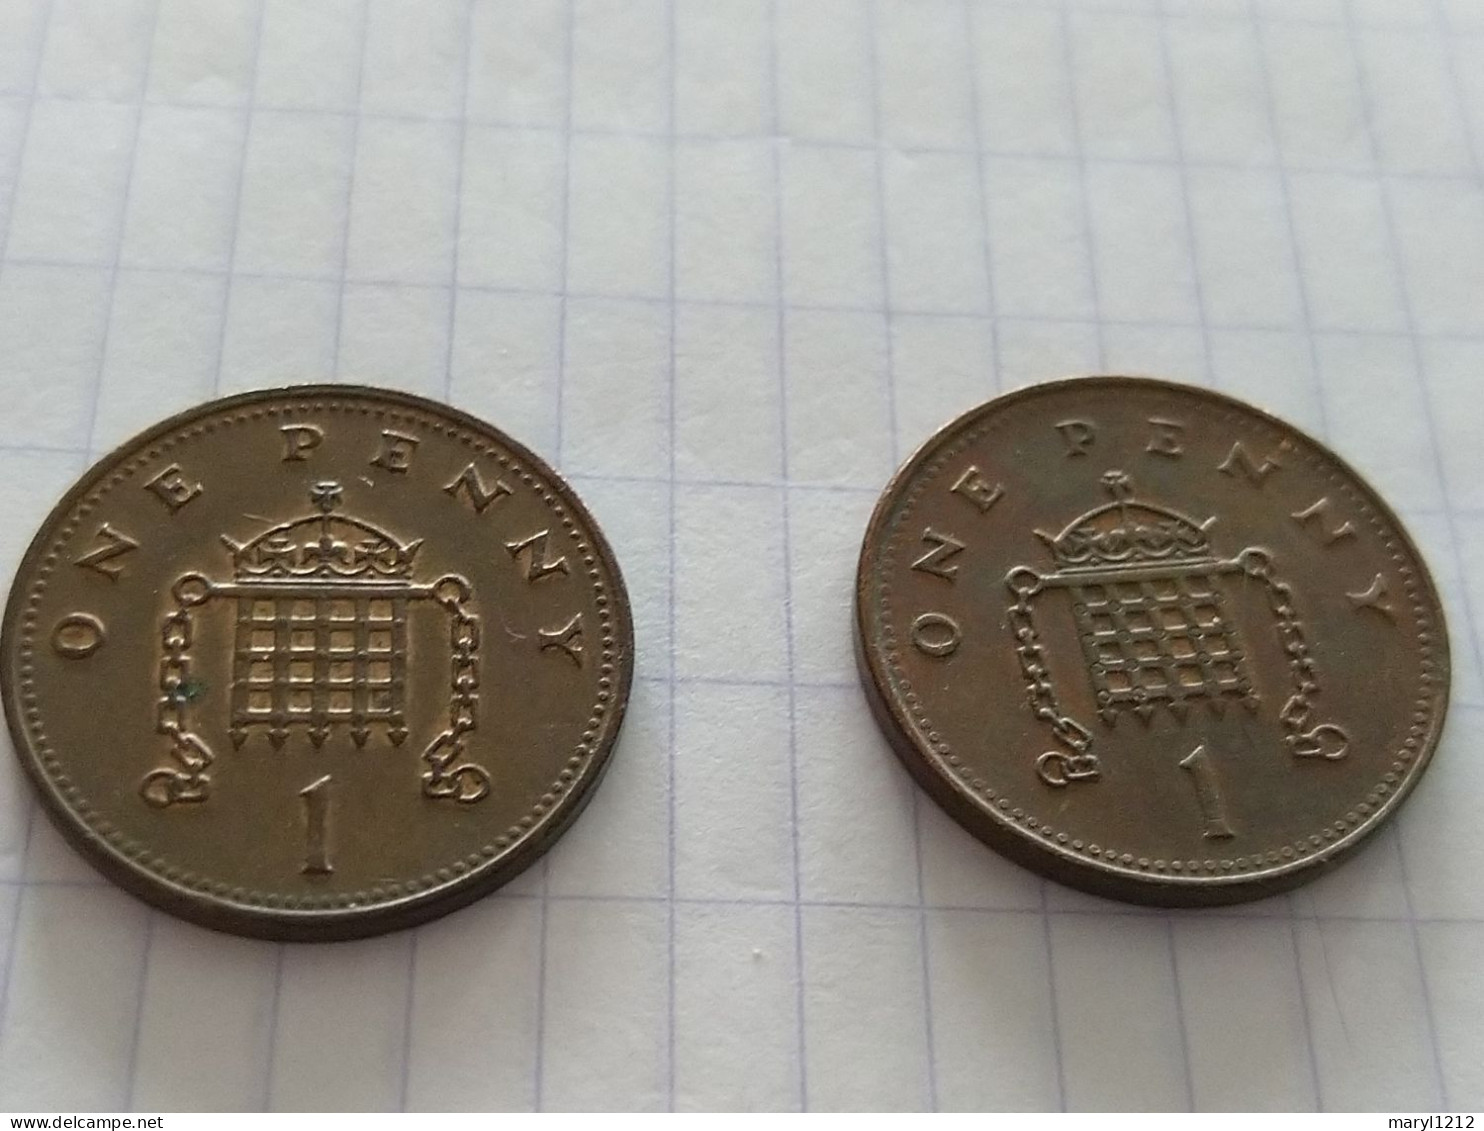 2 Pièces De One Penny U.K. 1988 - 1998 - 1 Penny & 1 New Penny